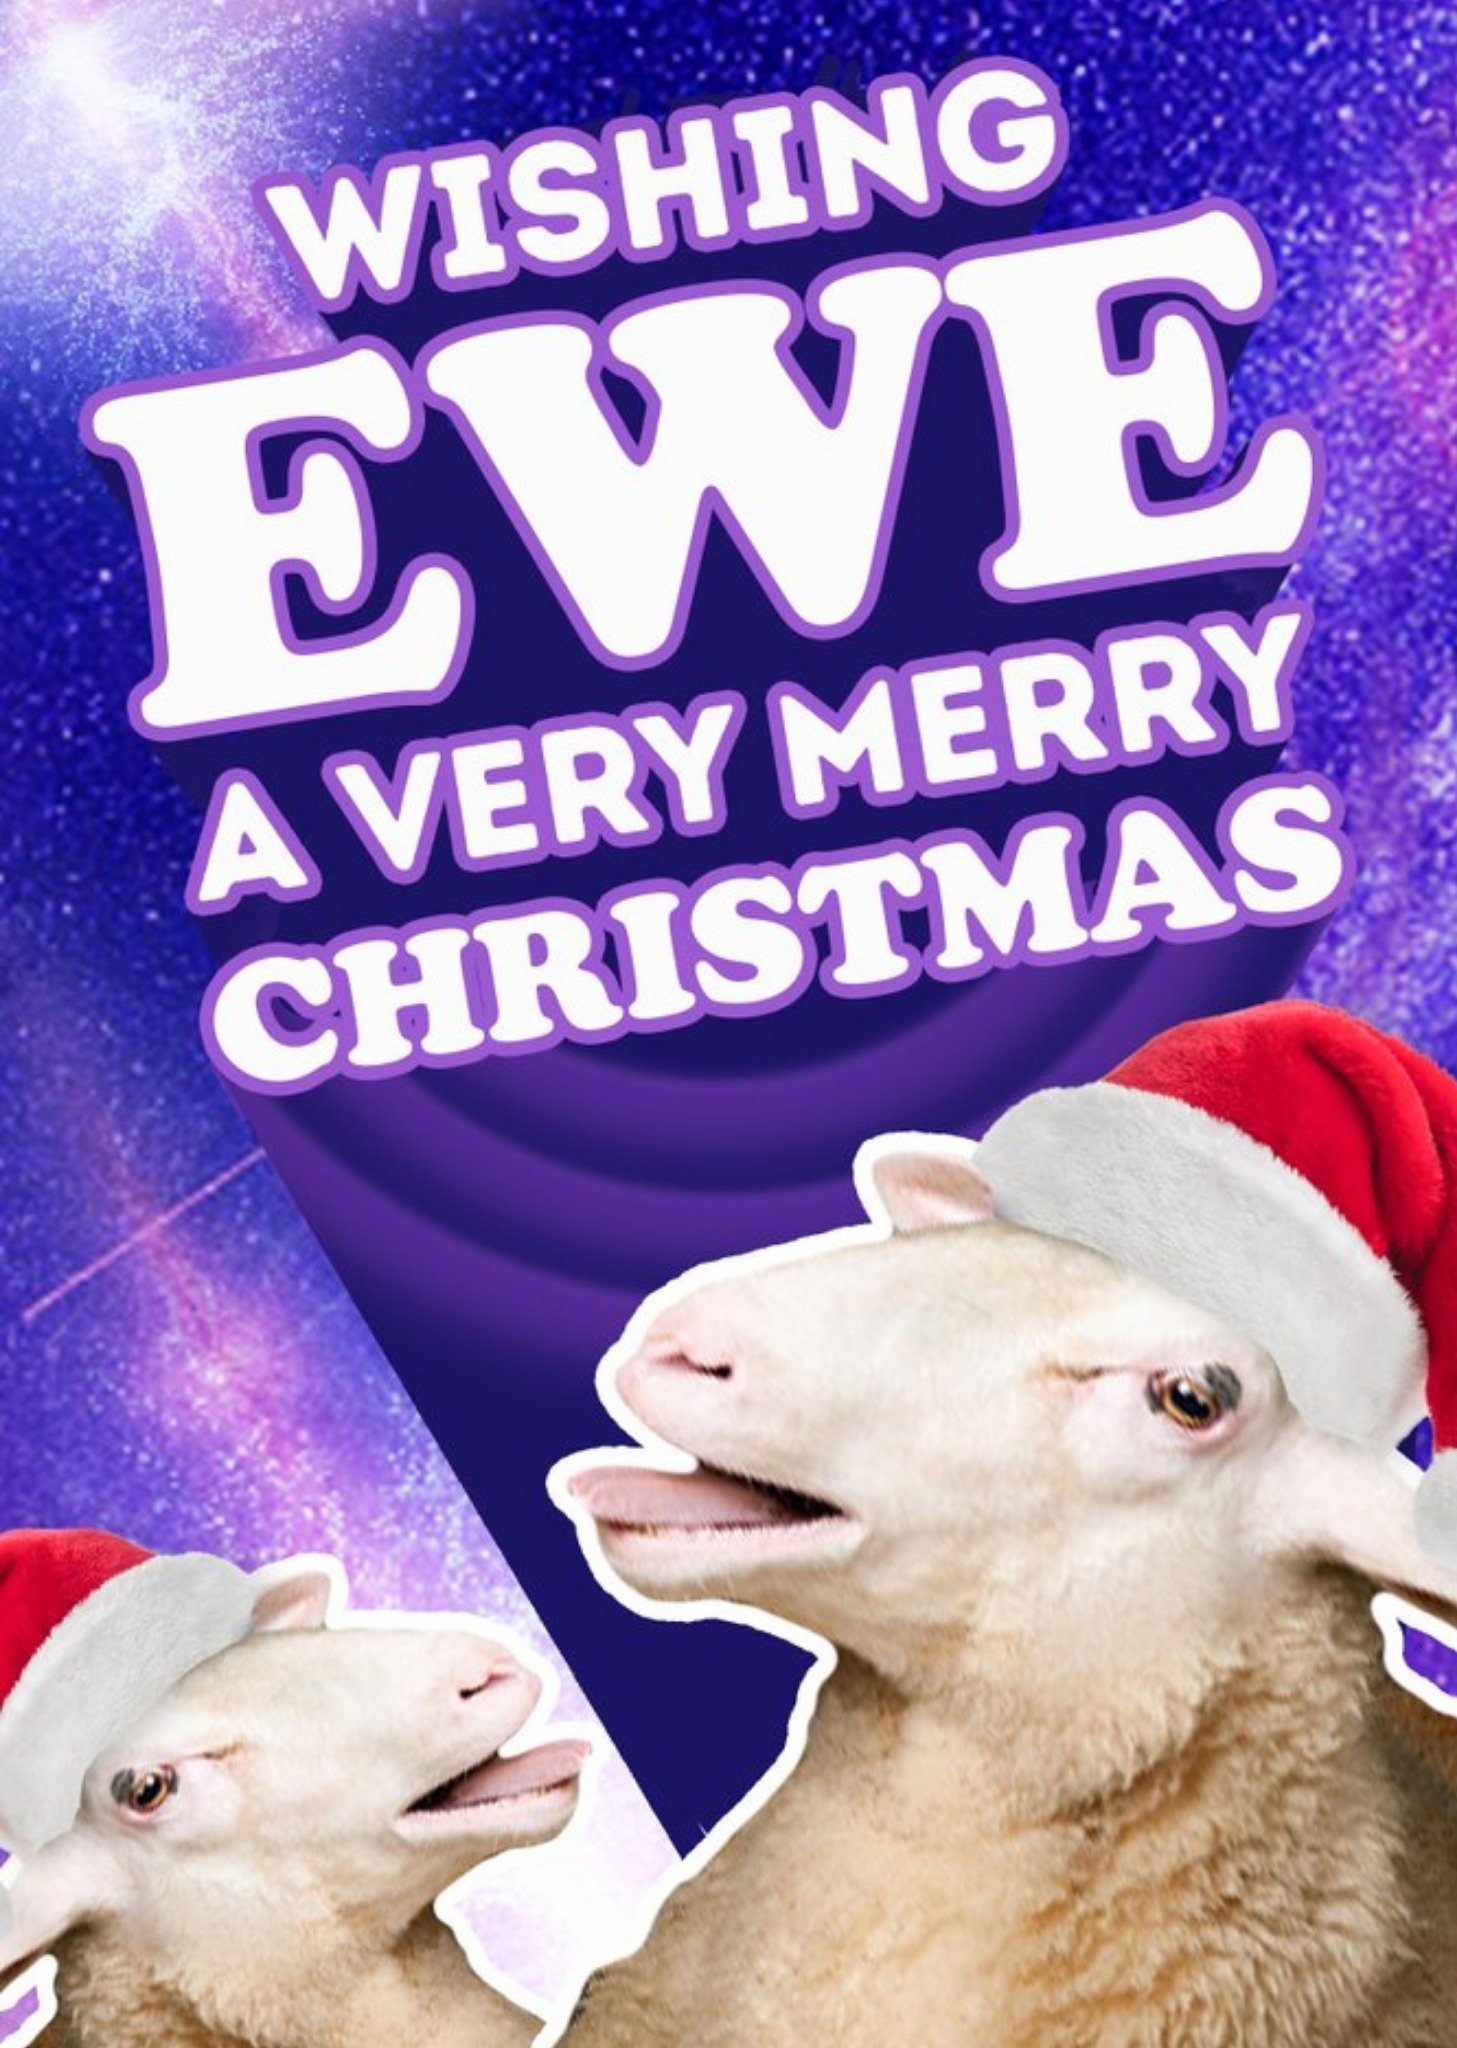 Moonpig Wishing Ewe A Very Merry Christmas Funny Card Ecard